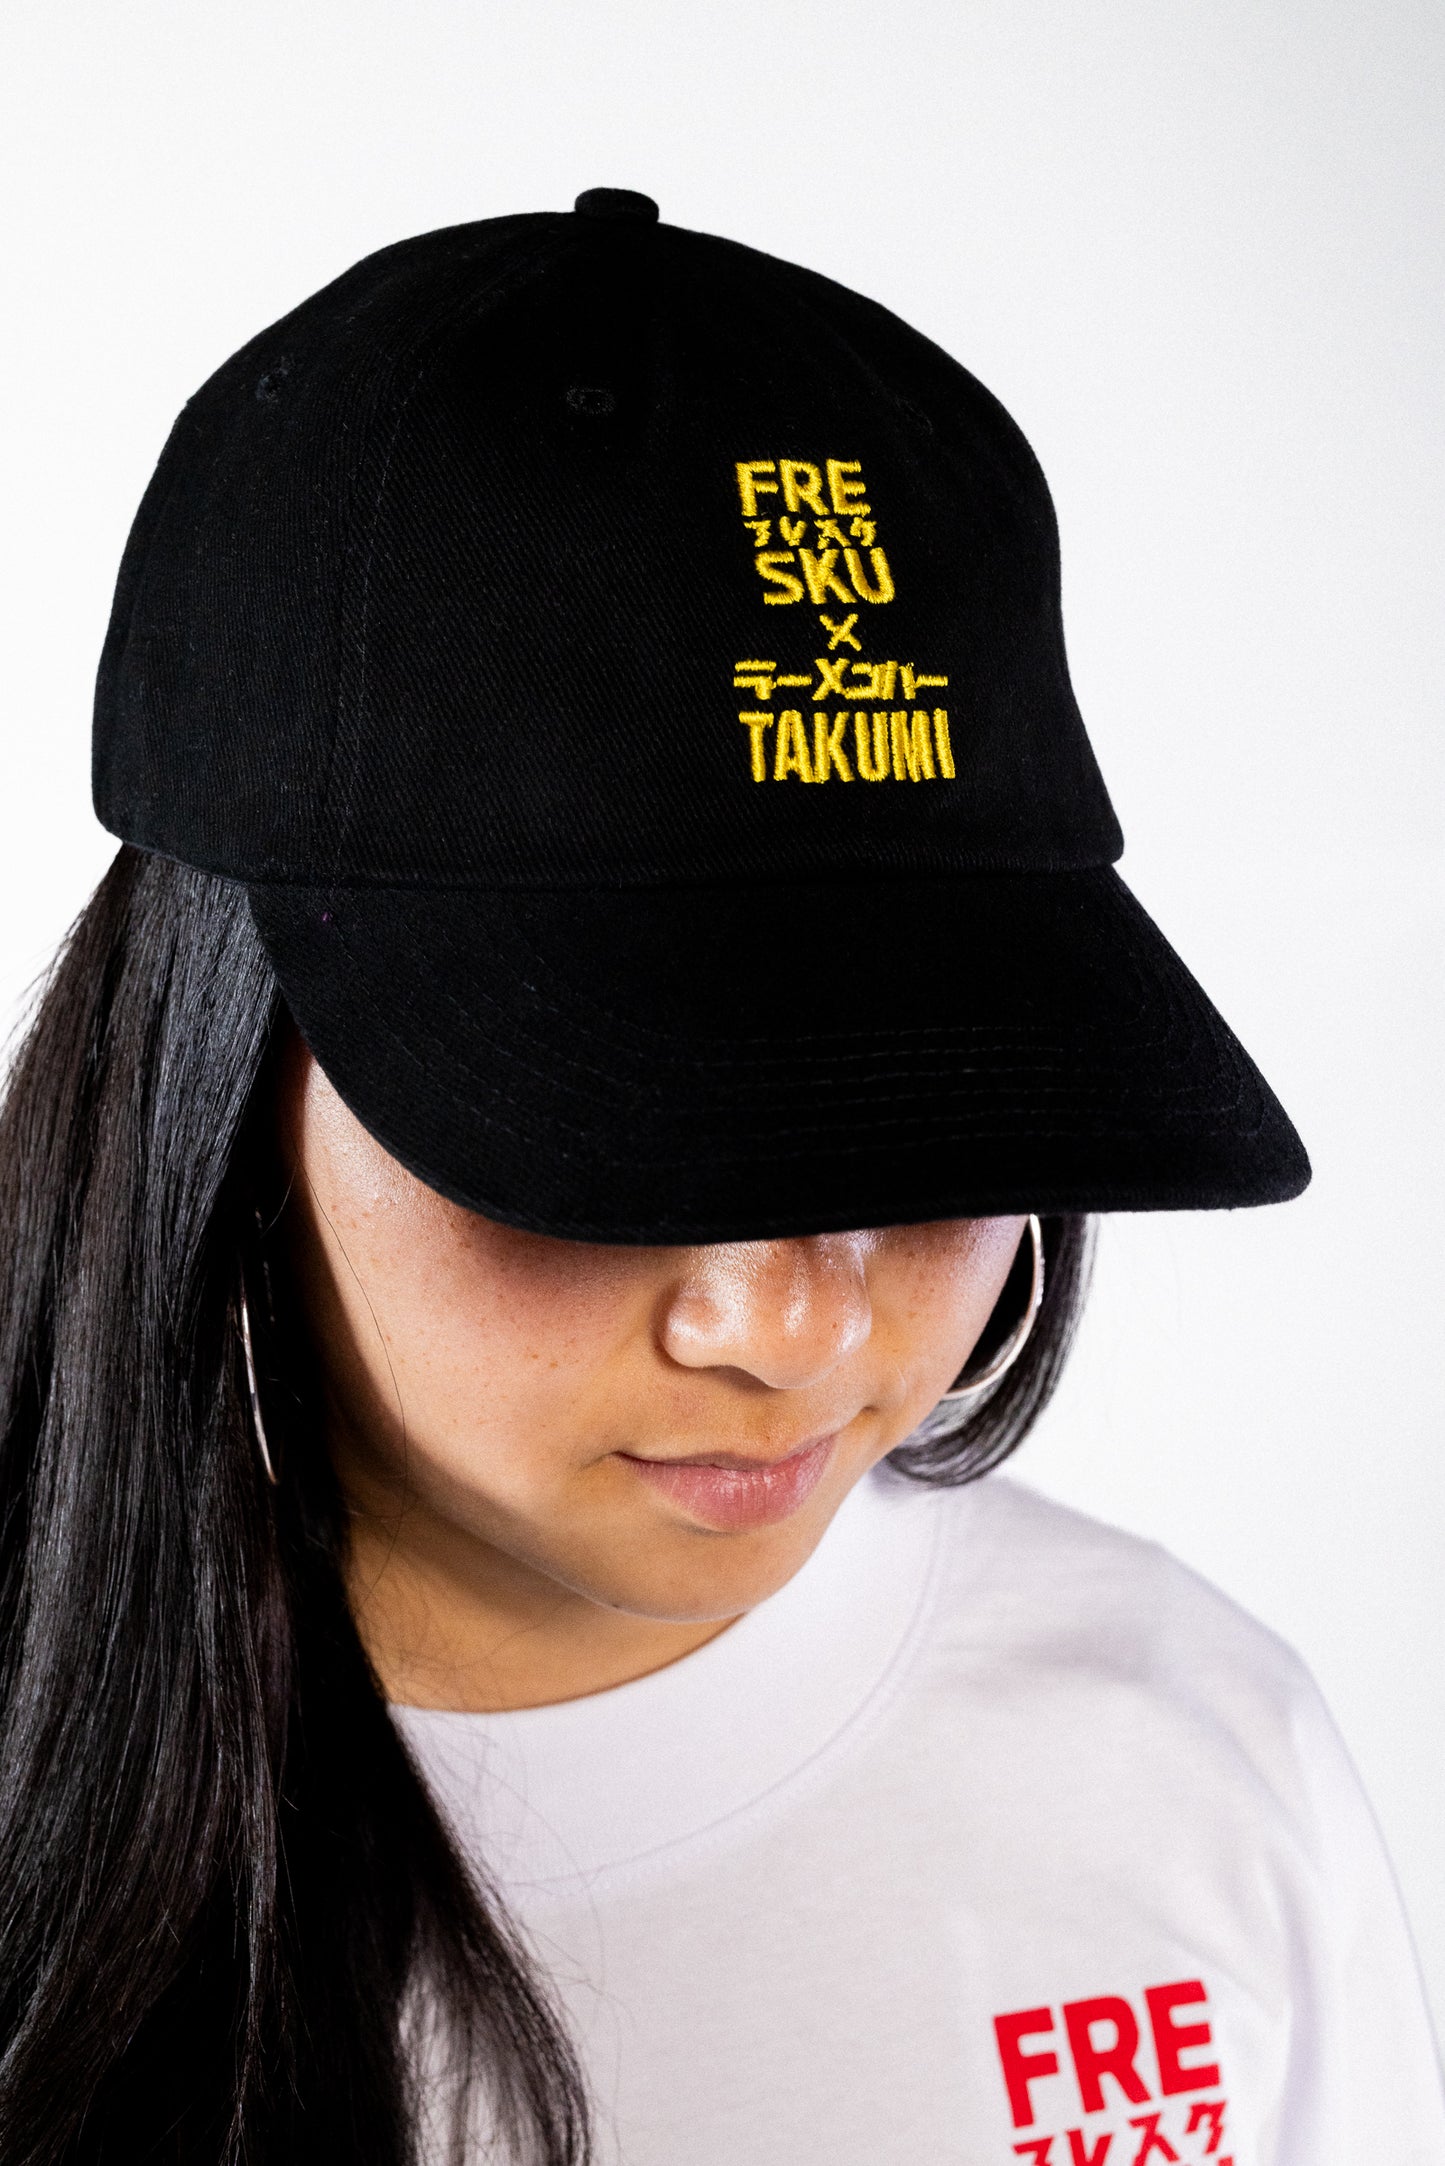 Fresku x Takumi Collaboration Hat